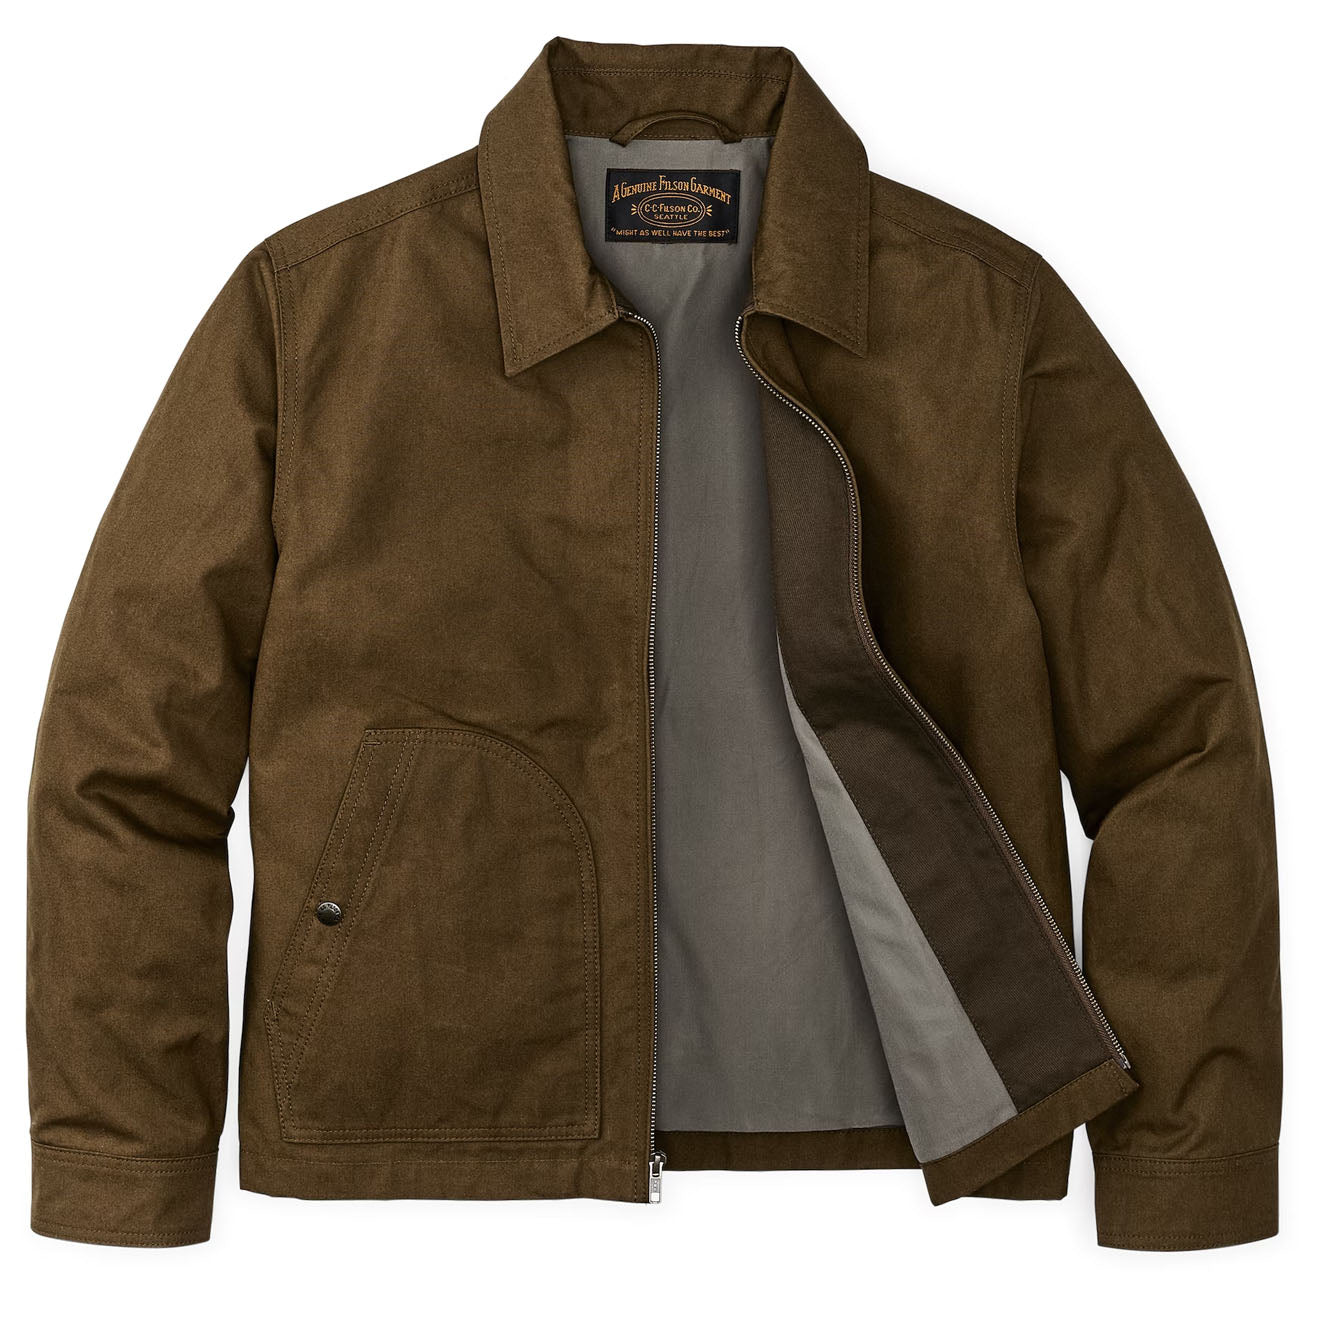 Filson Ranger Crewman Jacket Olive Drab | Yards Store Menswear